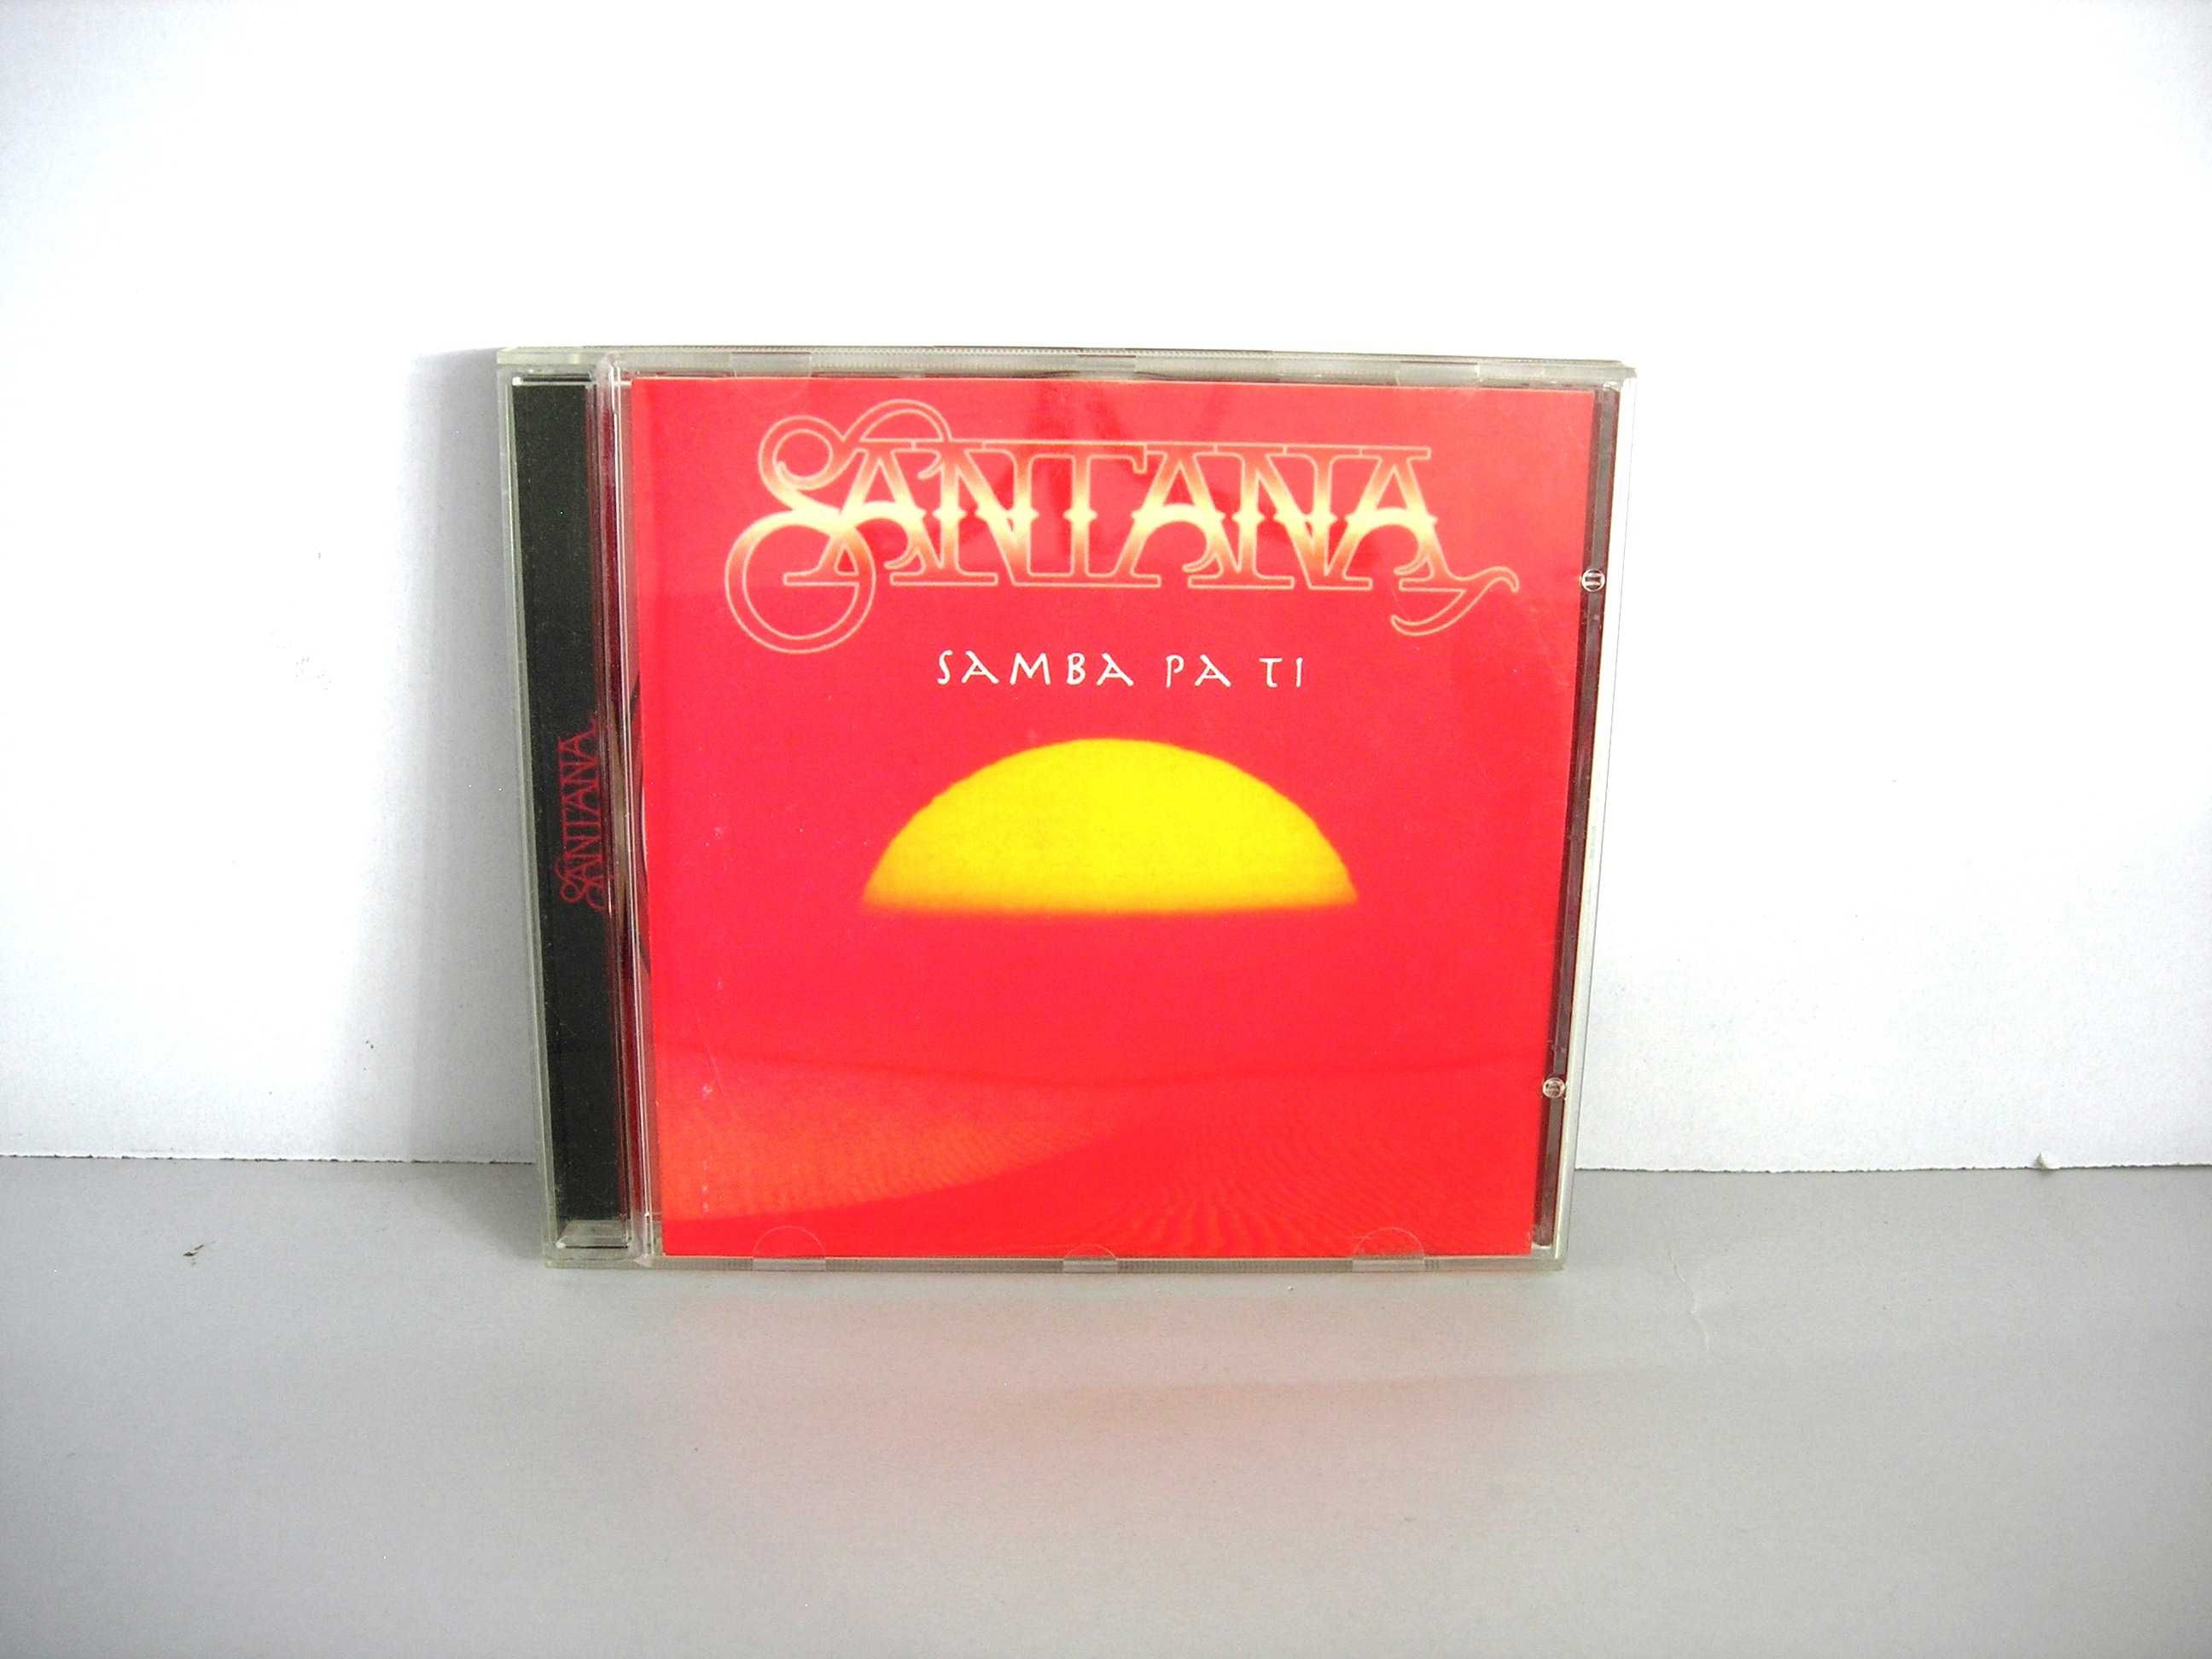 Carlos Santana "Samba Pa Ti" CD Sony Music 1995